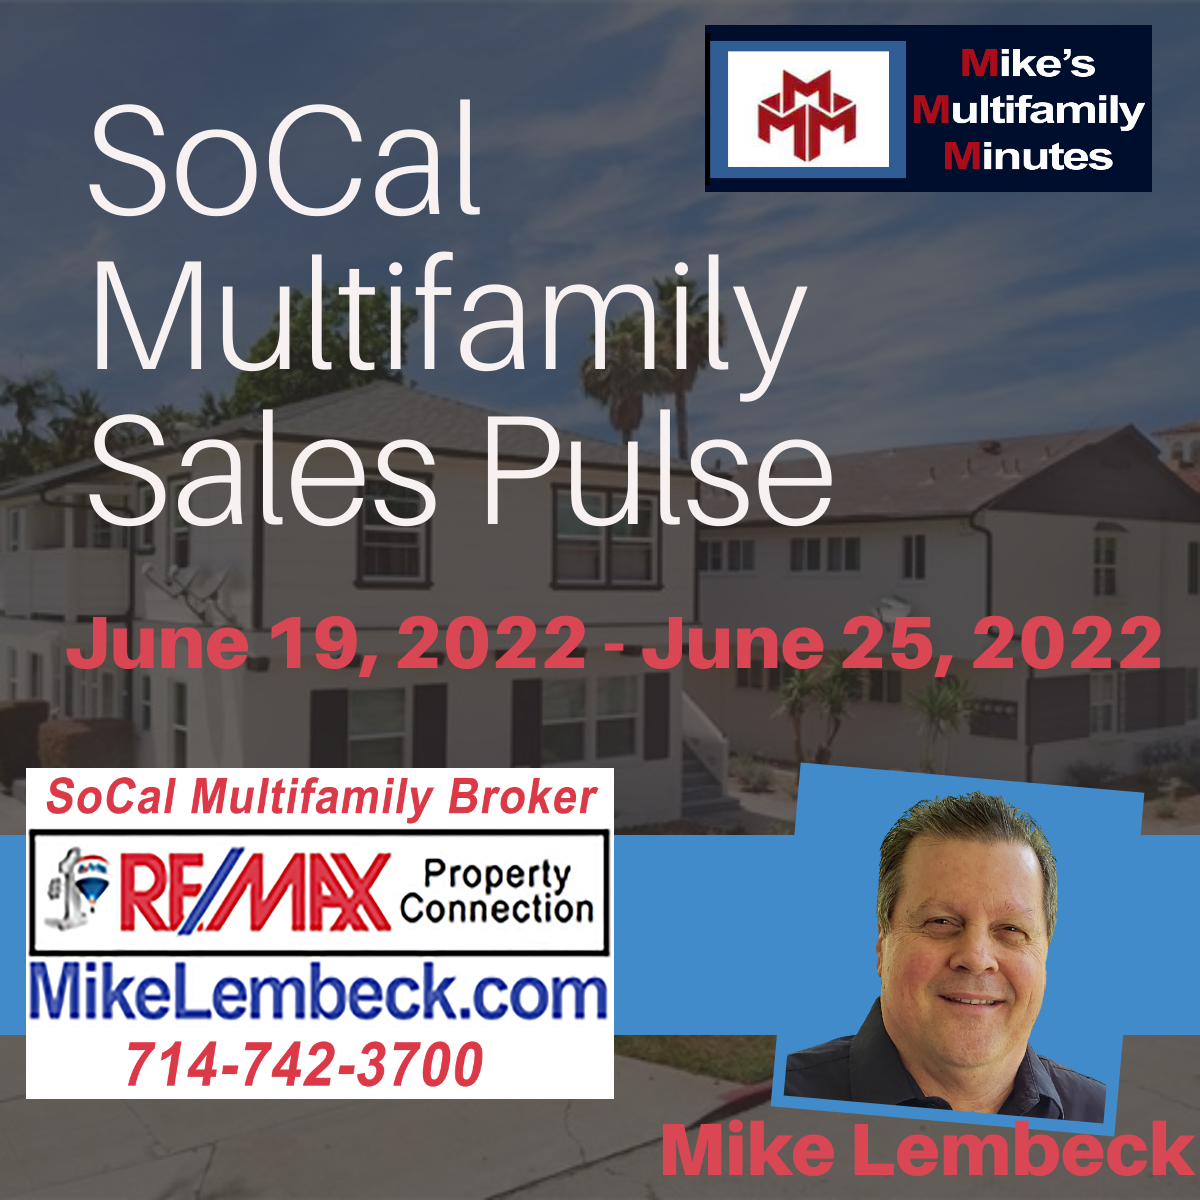 SoCal Multifamily Sales Pulse - June 19, 2022 - June 25, 2022 - MikeLembeck.com